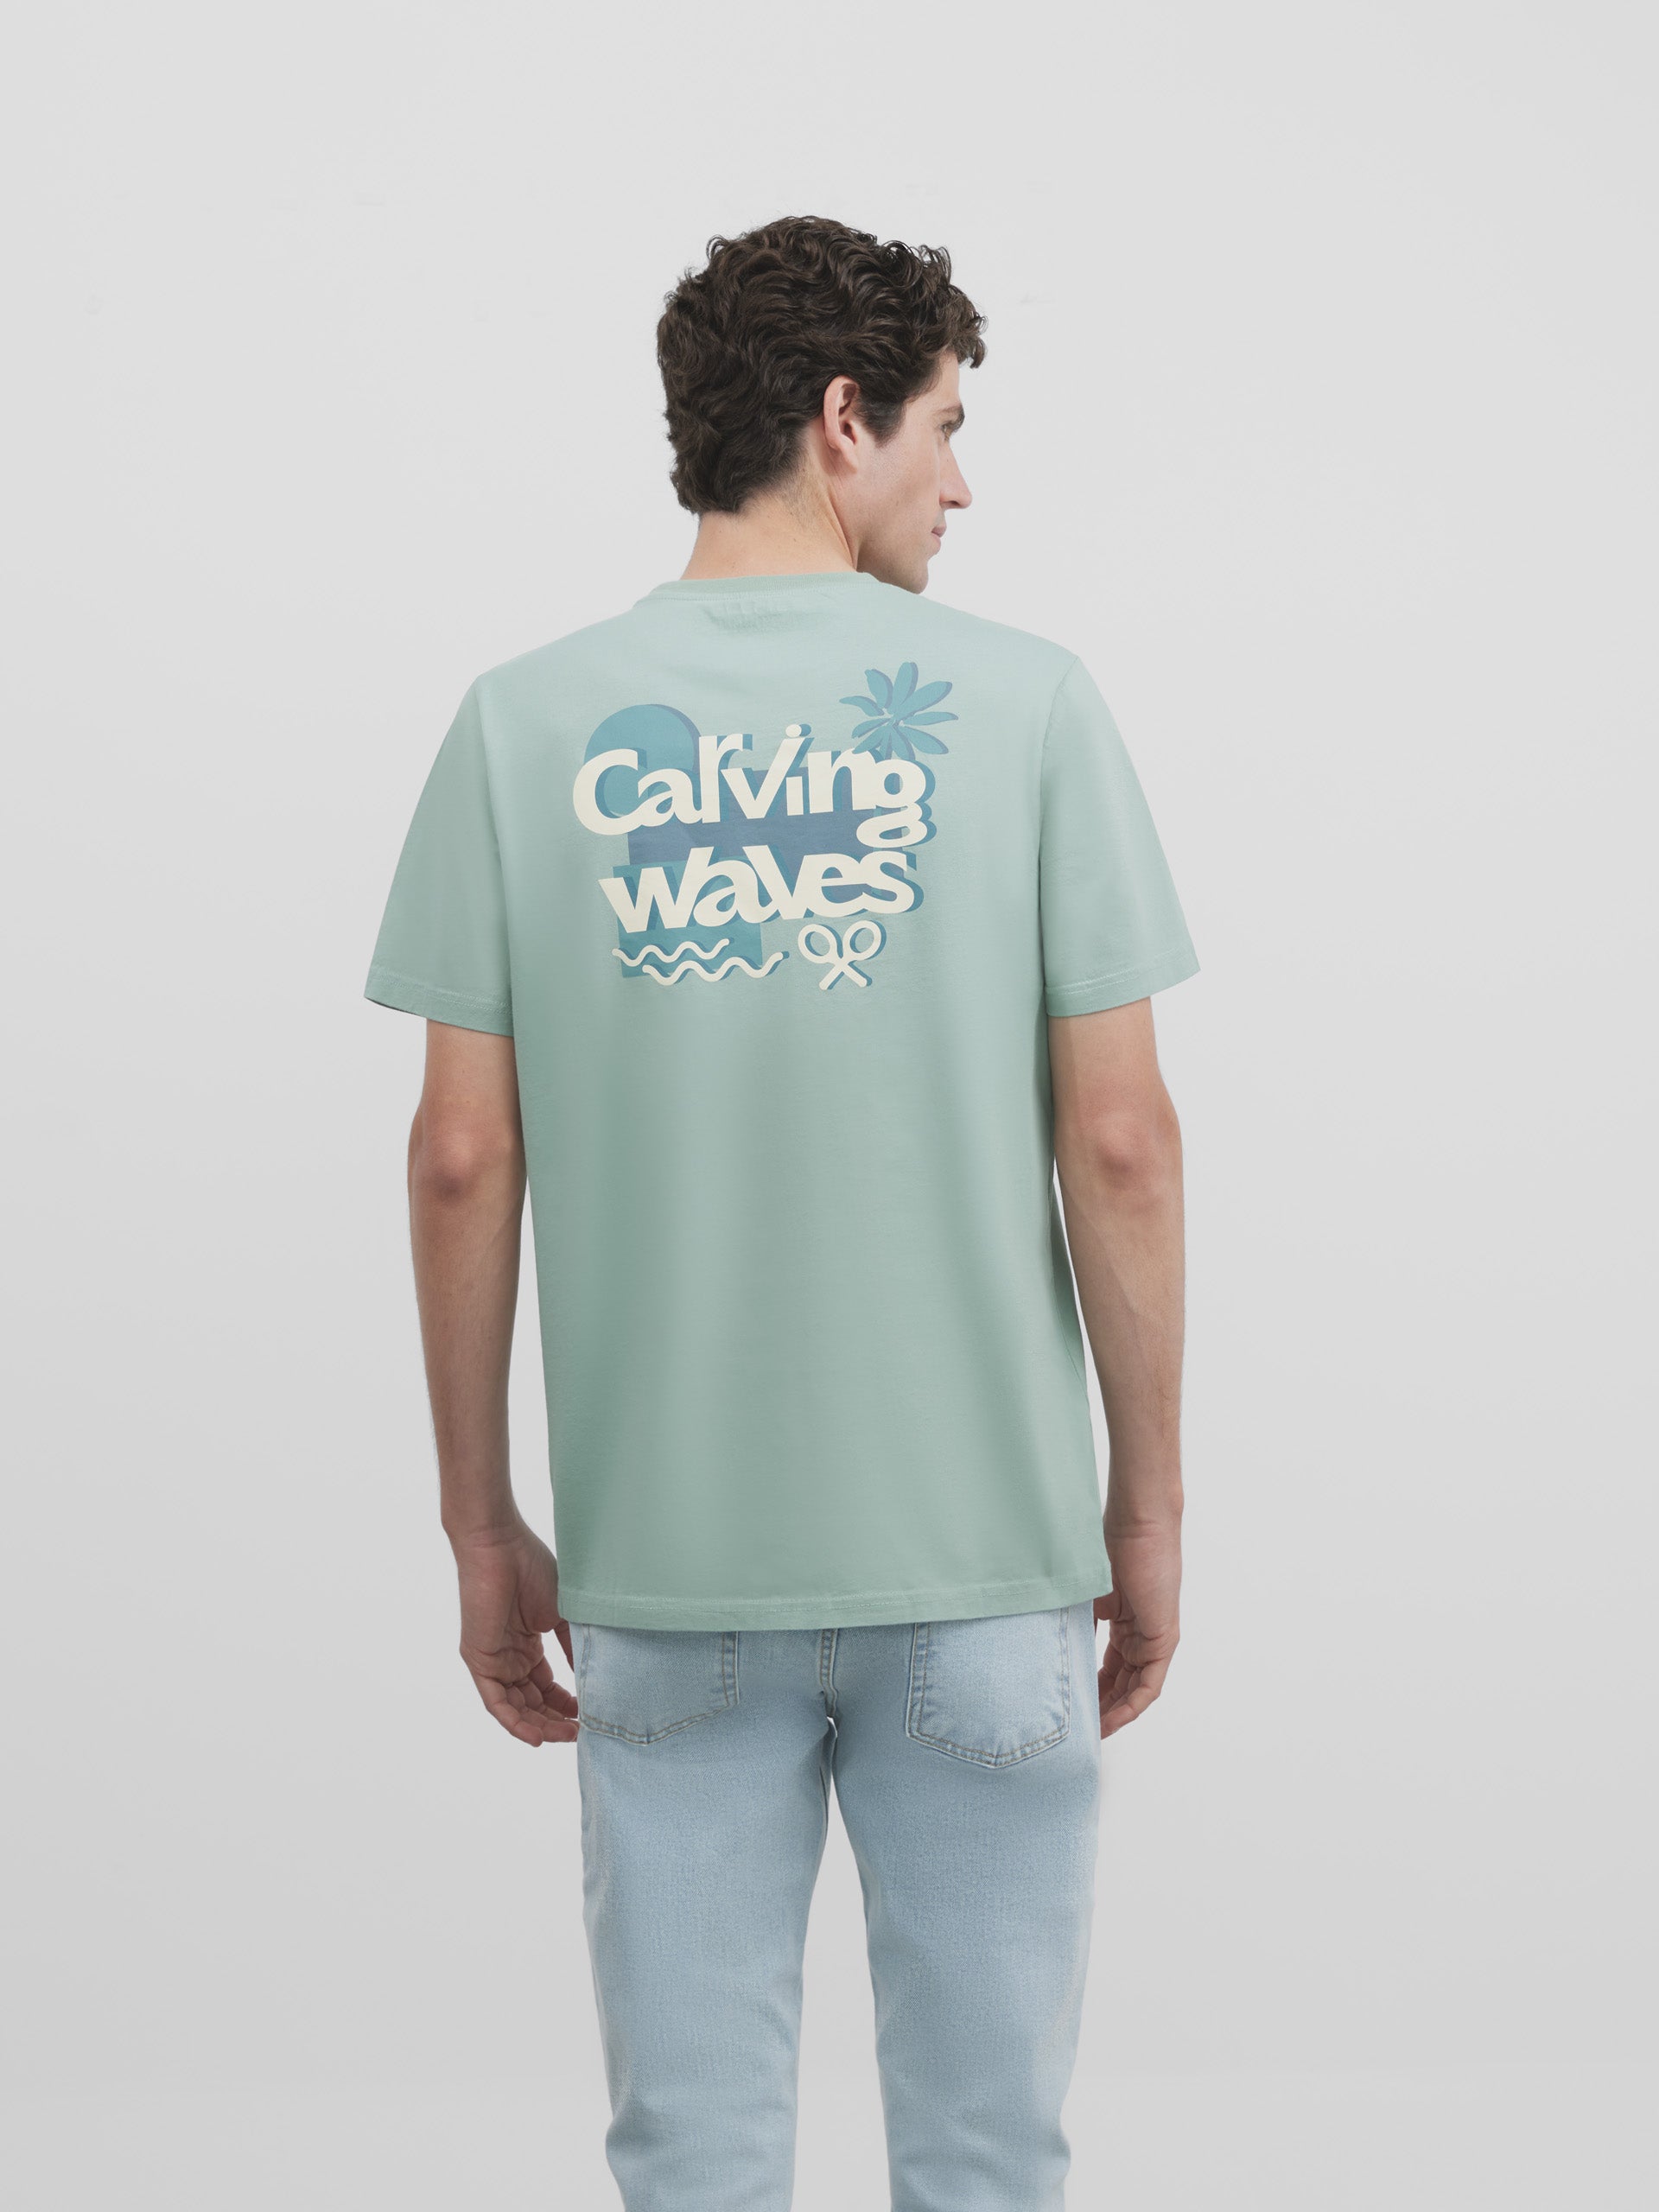 Carving waves green t-shirt